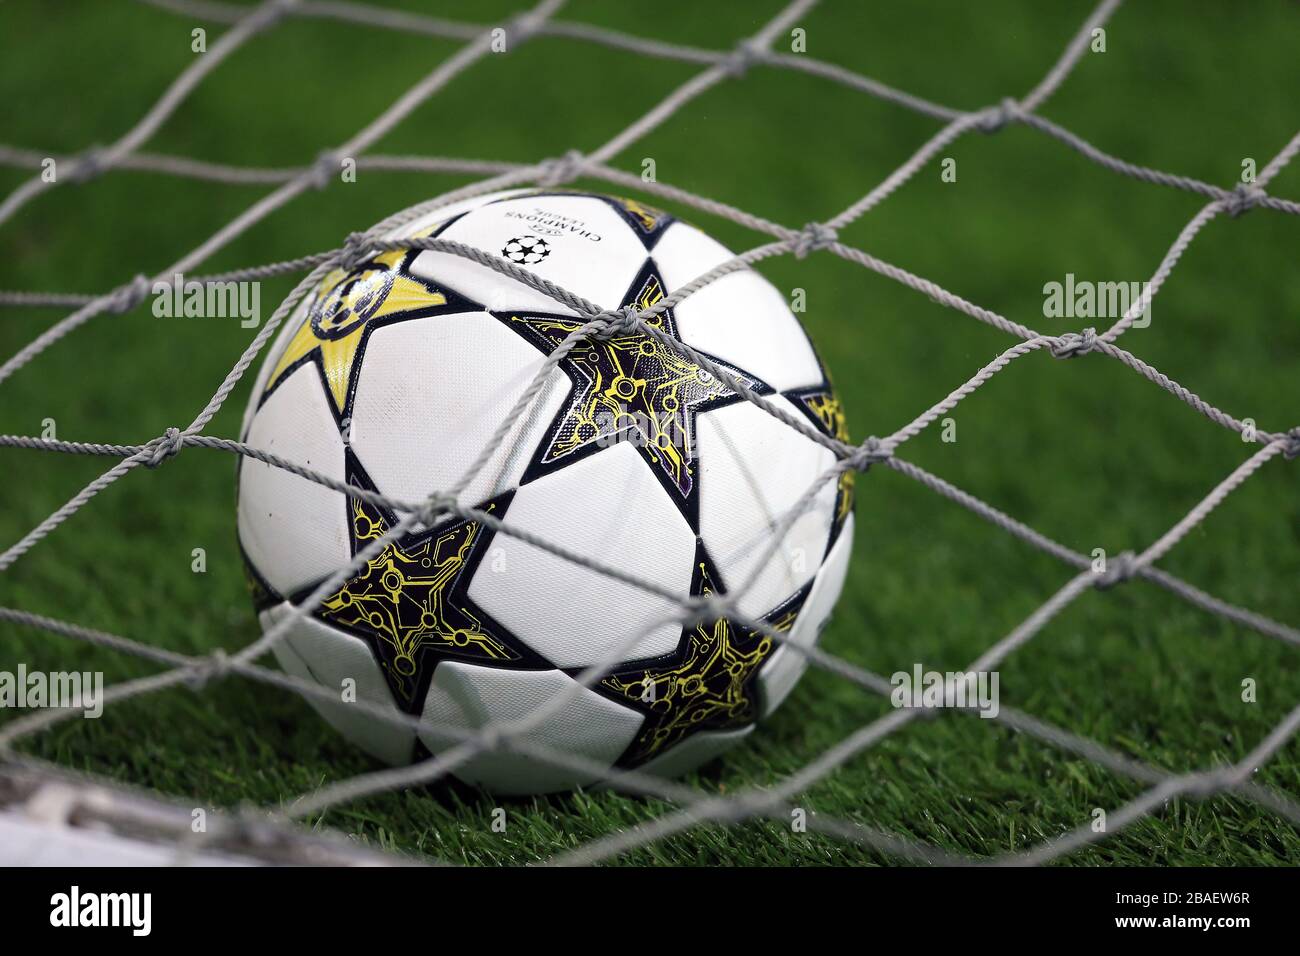 UEFA Champions League match day ball Stock Photo